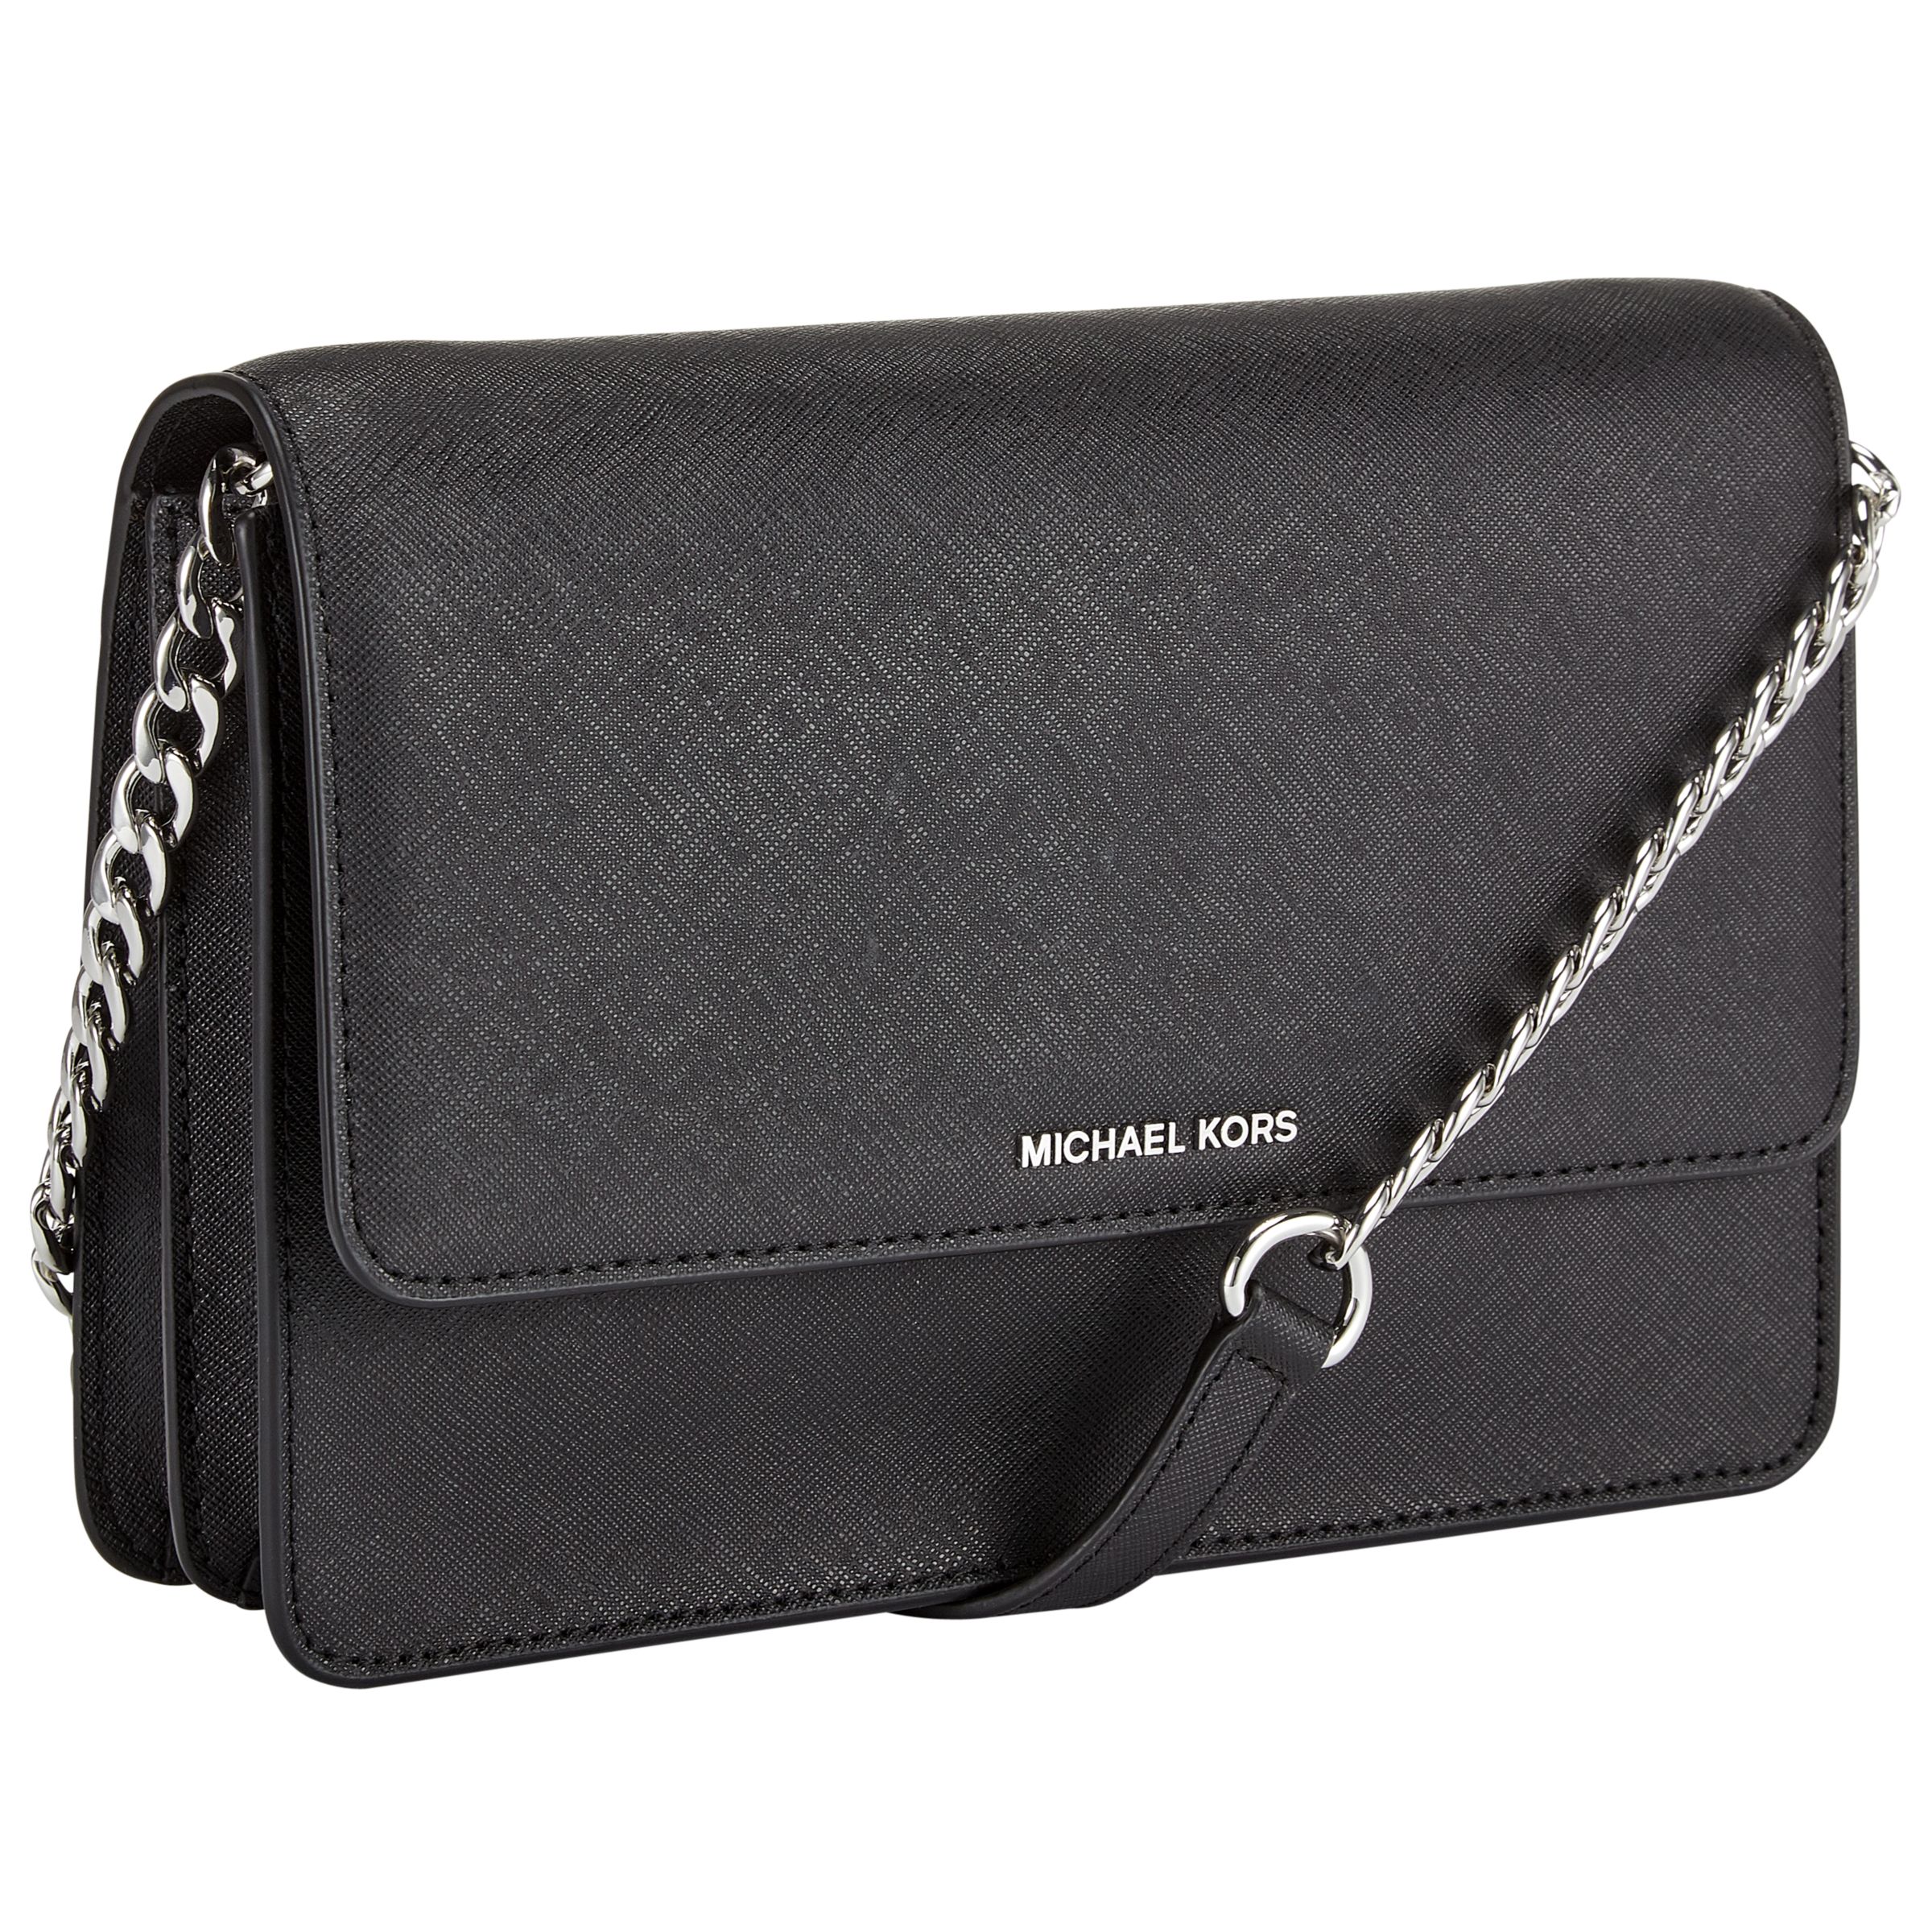 Michael Kors Daniela Large Saffiano Leather Crossbody Bag for Sale